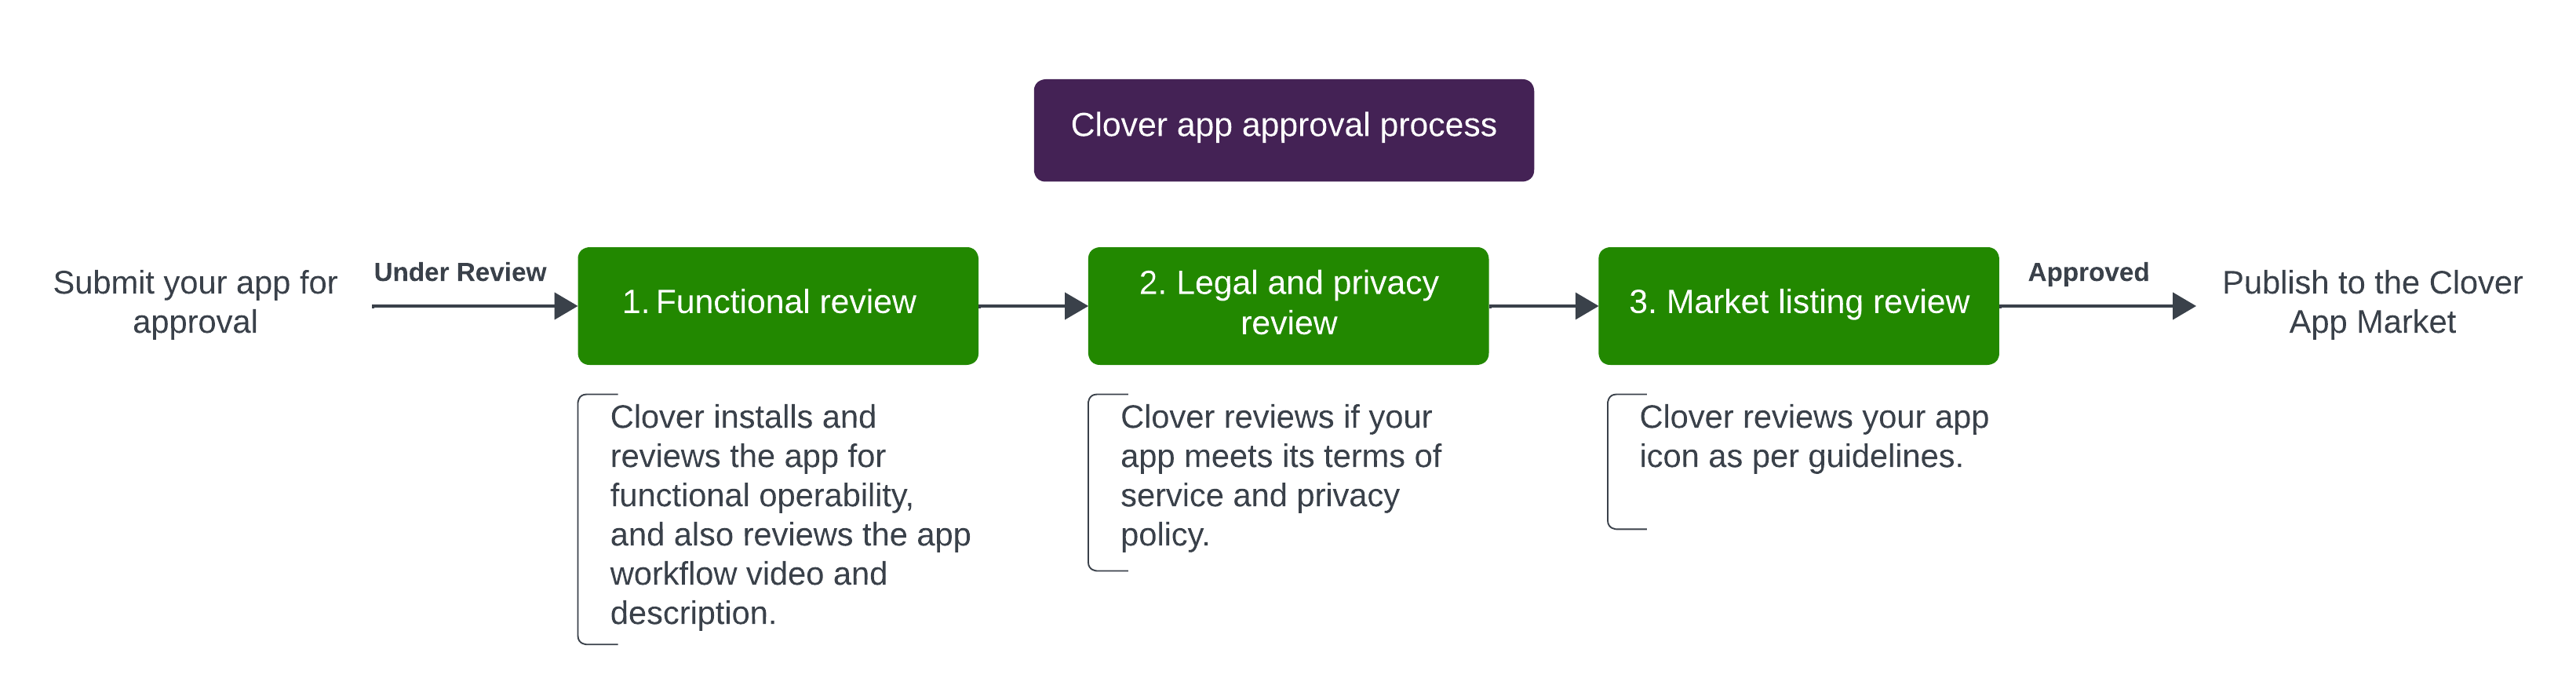 Clover app approval process